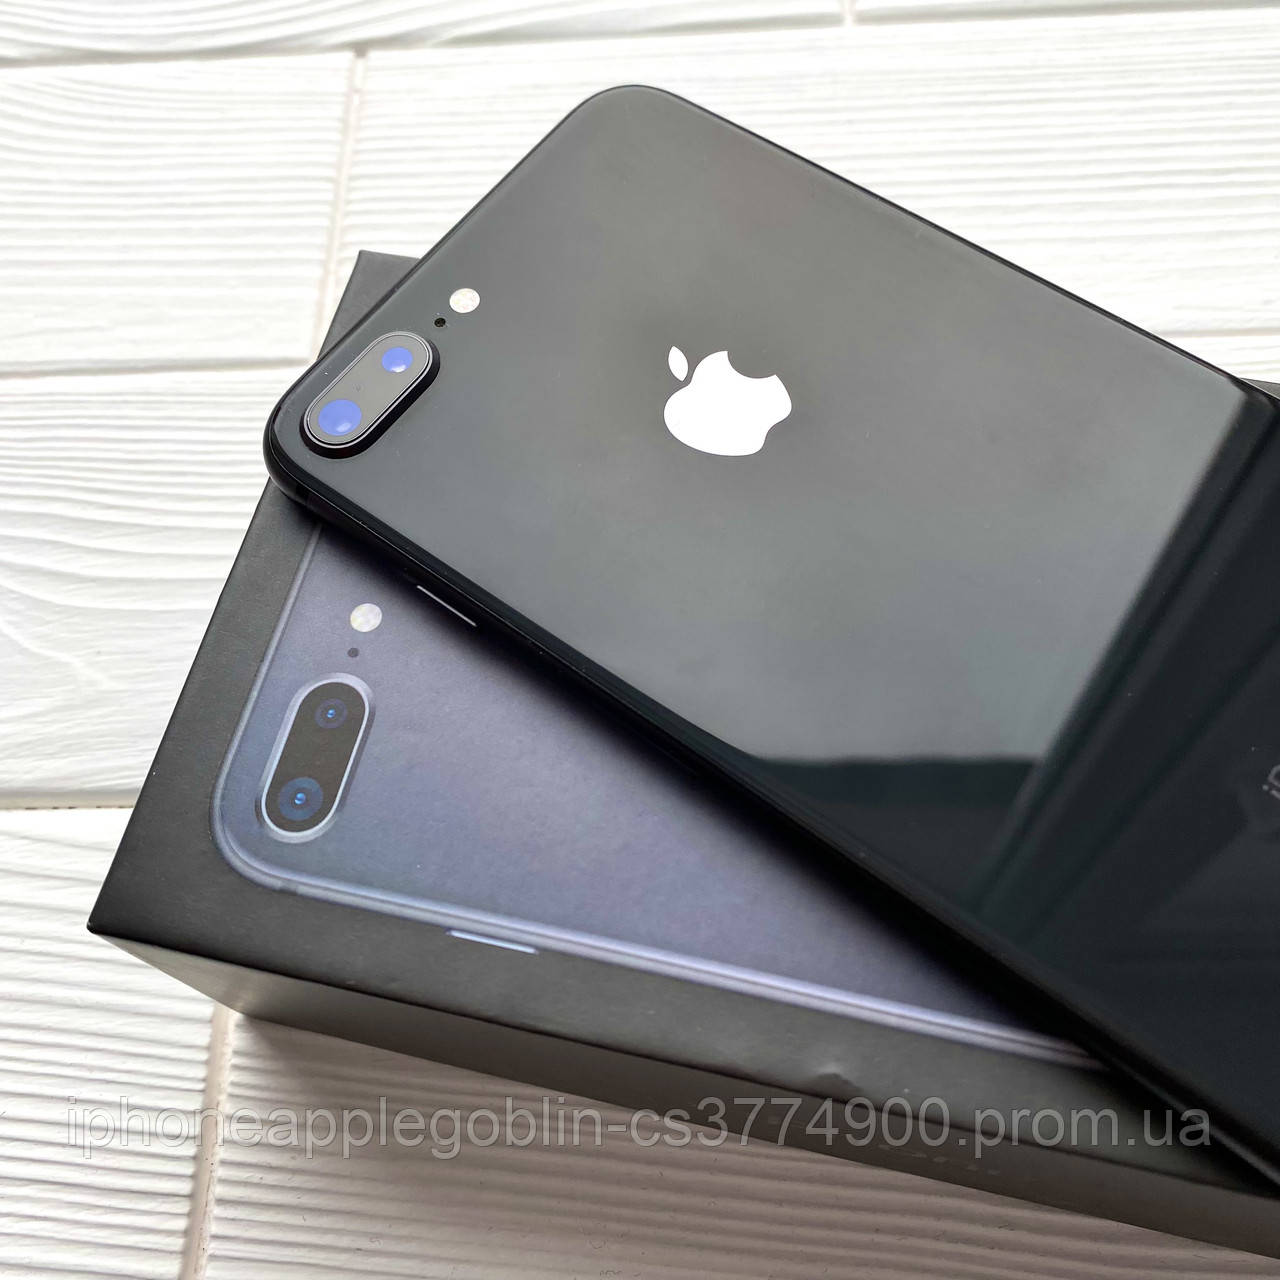 IPhone 8 Plus 64 gb Space gray neverlock Apple